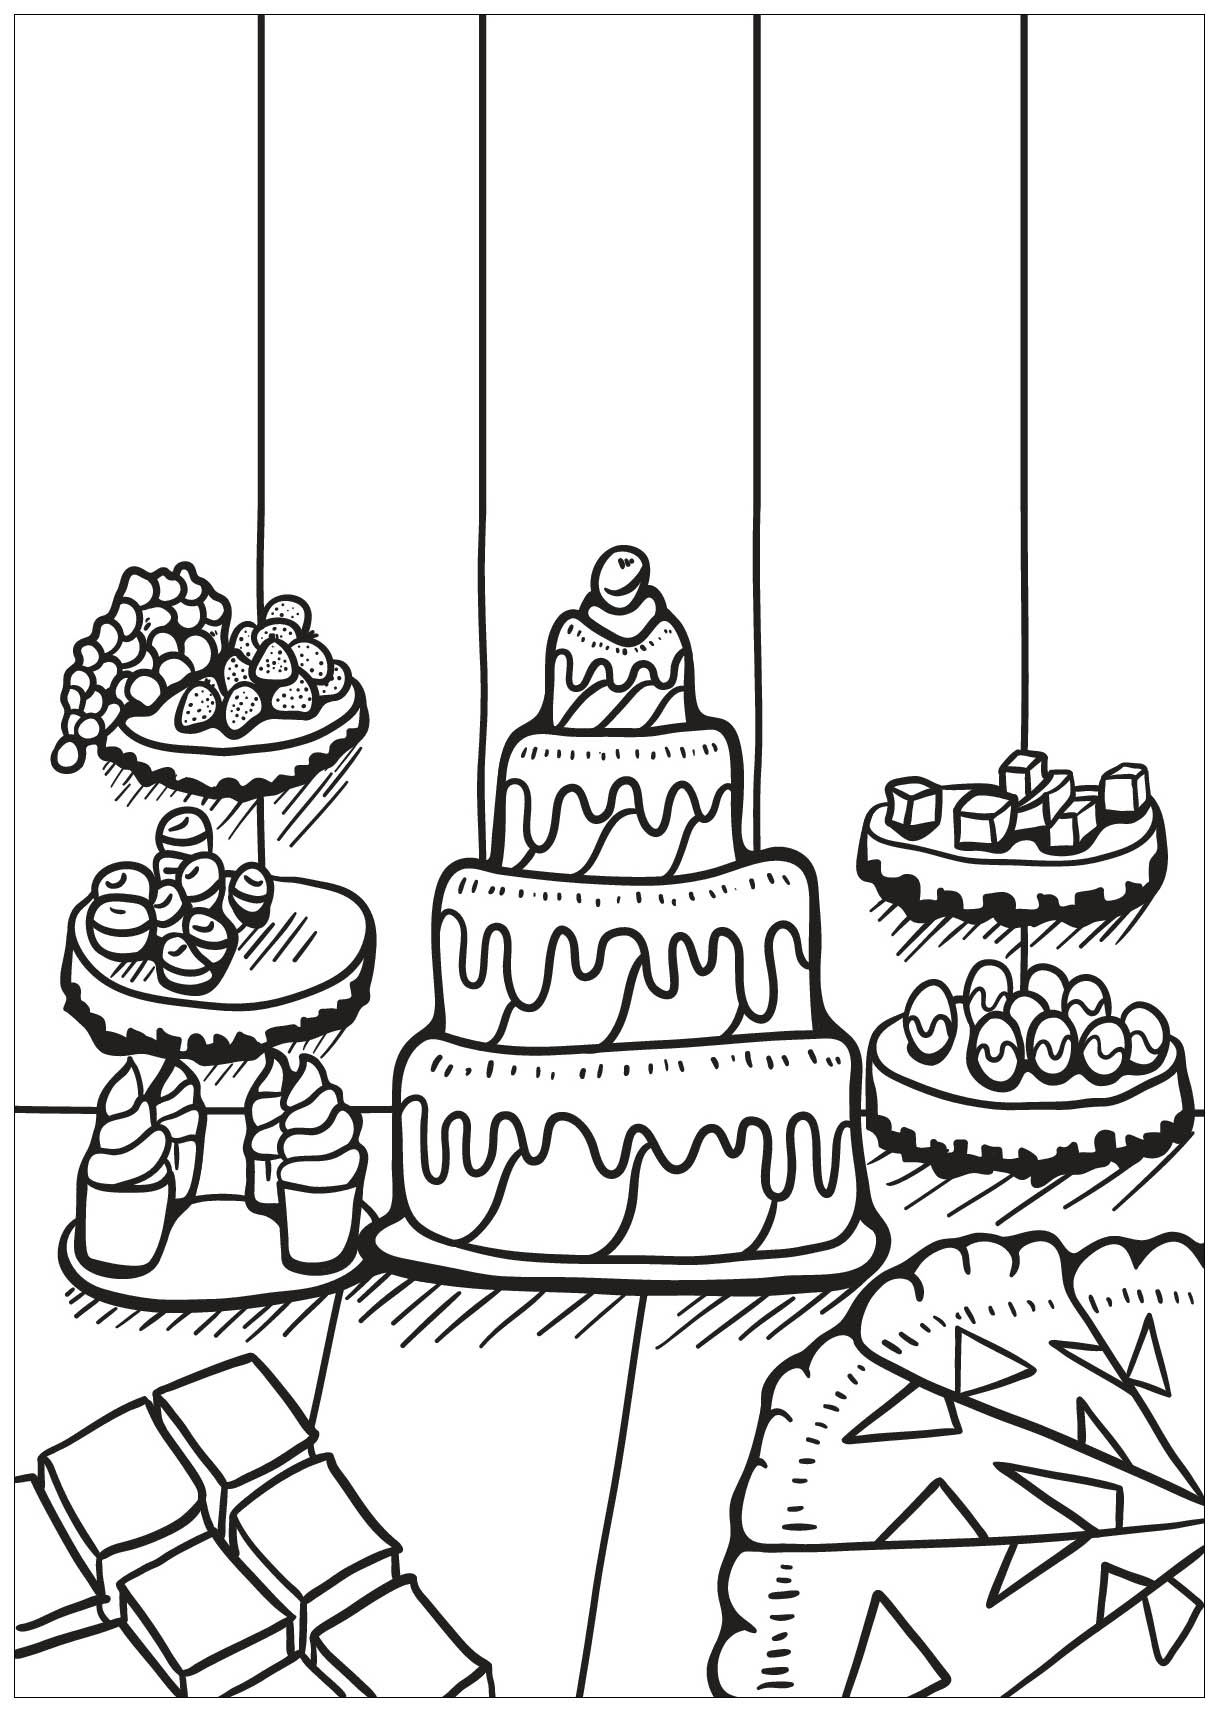 Coloriage Fr: Coloriage A Imprimer Kawaii Cupcake intérieur Dessin De Cupcake A Imprimer